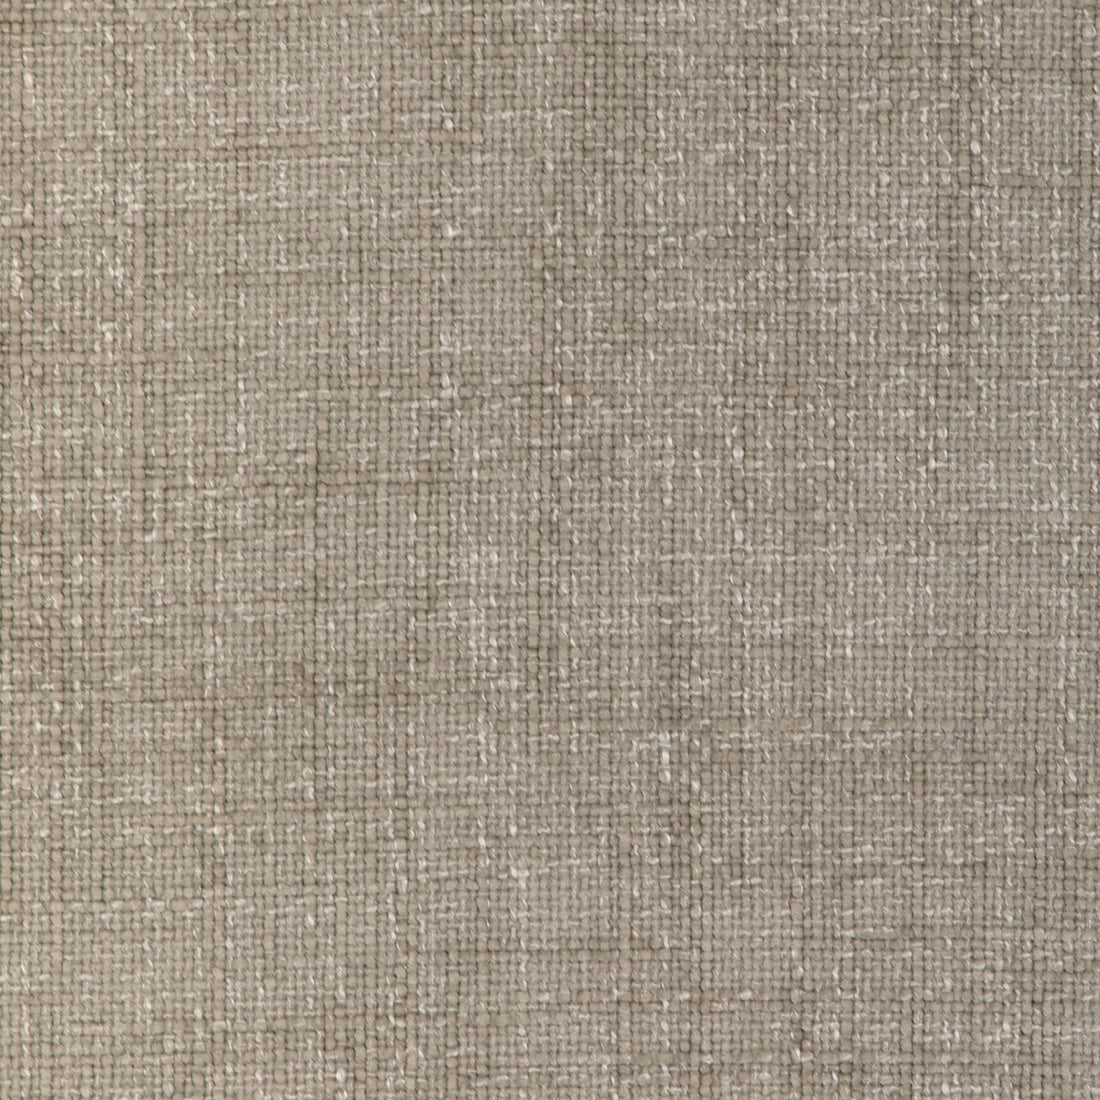 Kravet Smart fabric in 36677-1101 color - pattern 36677.1101.0 - by Kravet Smart in the Performance Kravetarmor collection